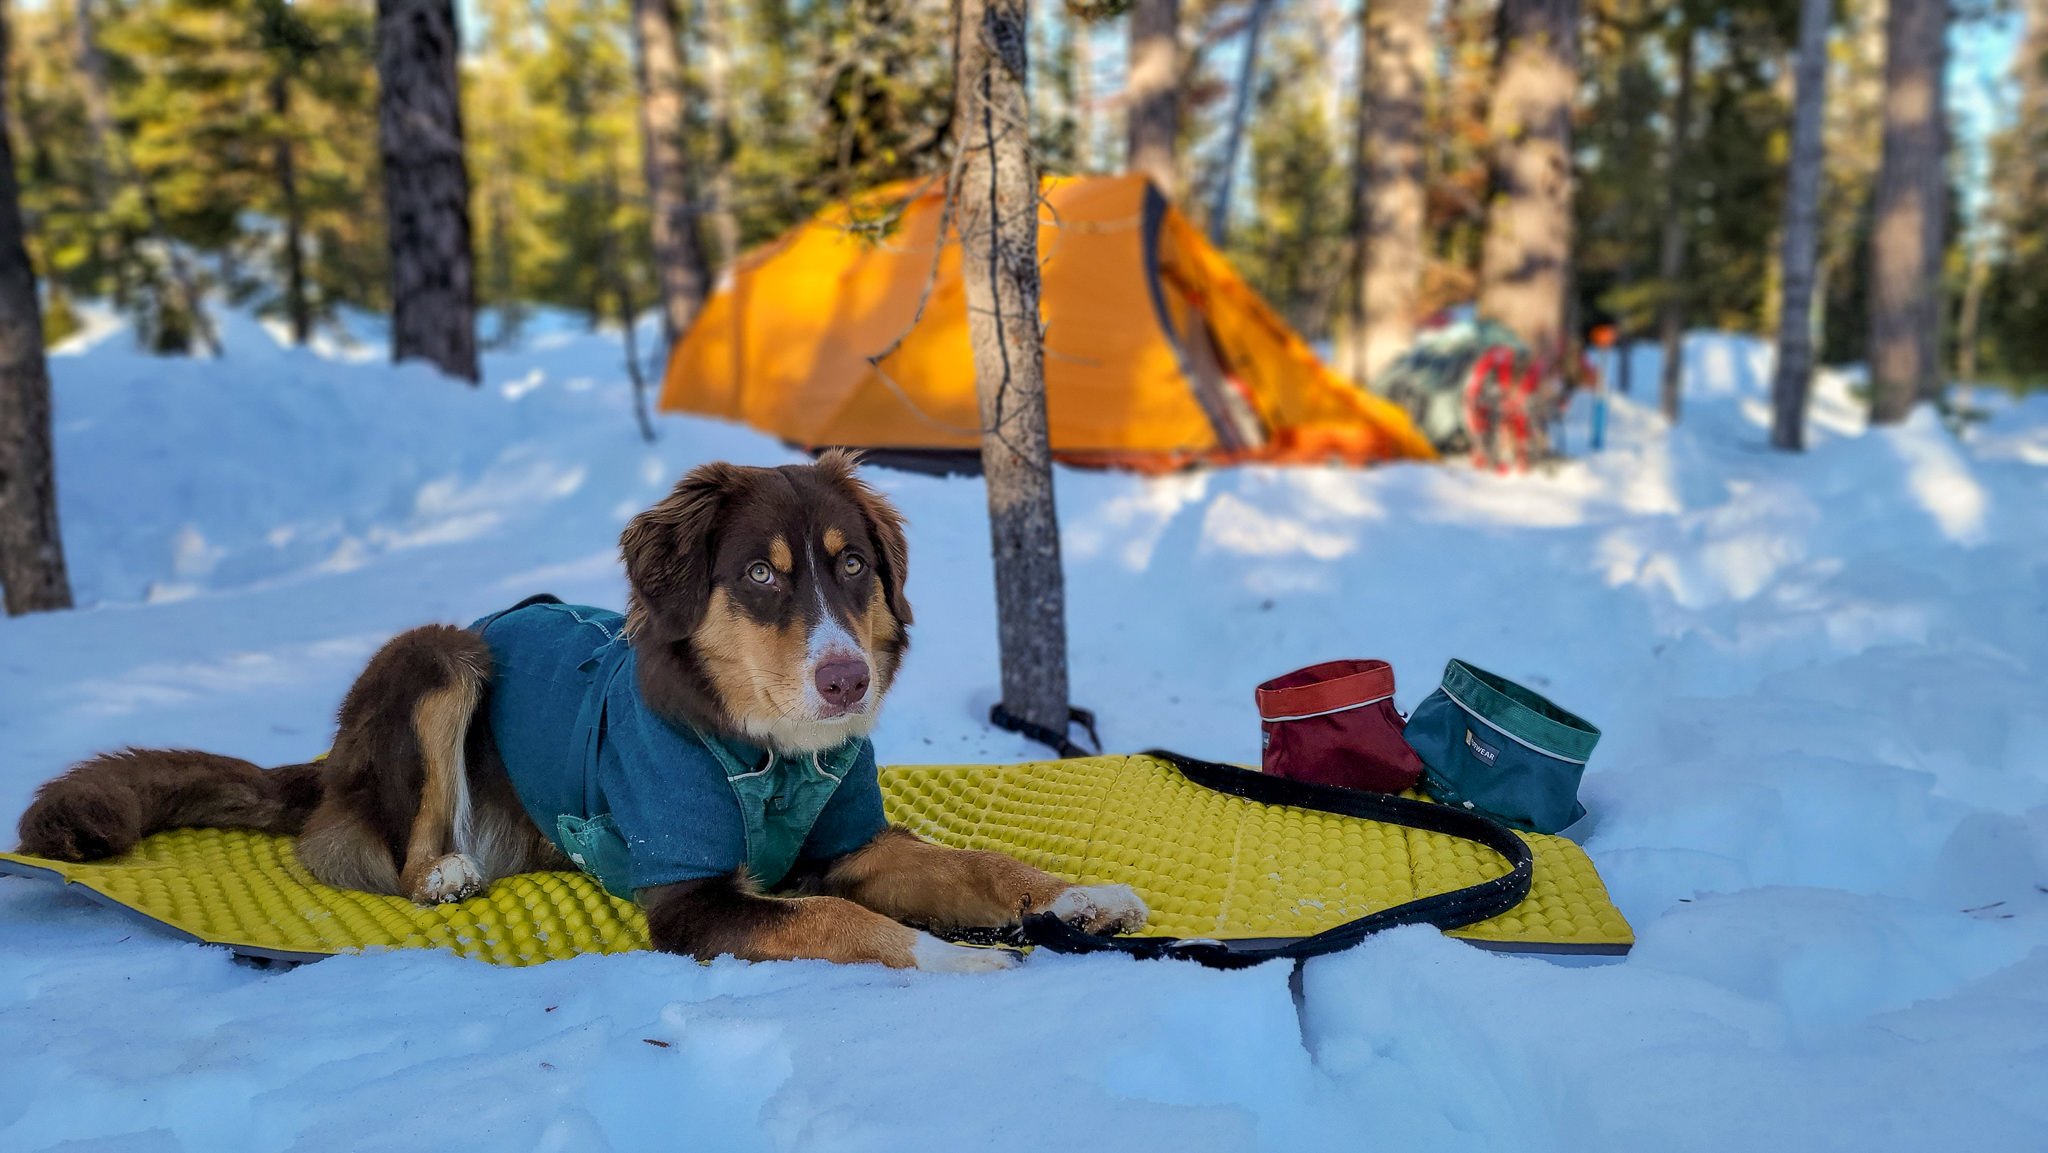 A dog winter camping